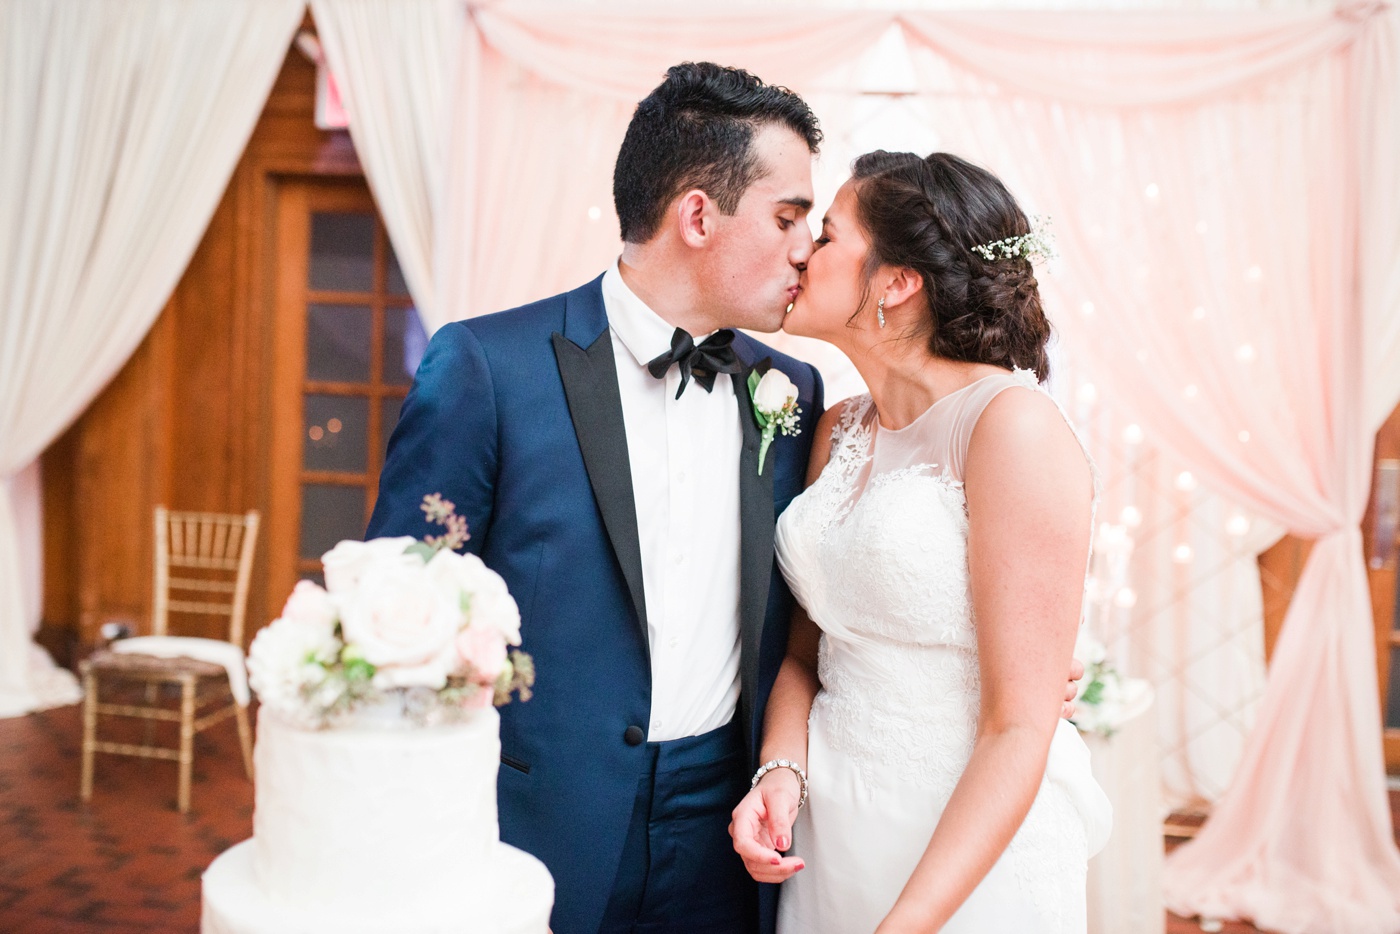 117 - Daniela + Franco - Celebrate at Snug Harbor Wedding - Staten Island New York Wedding Photographer - Alison Dunn Photography photo